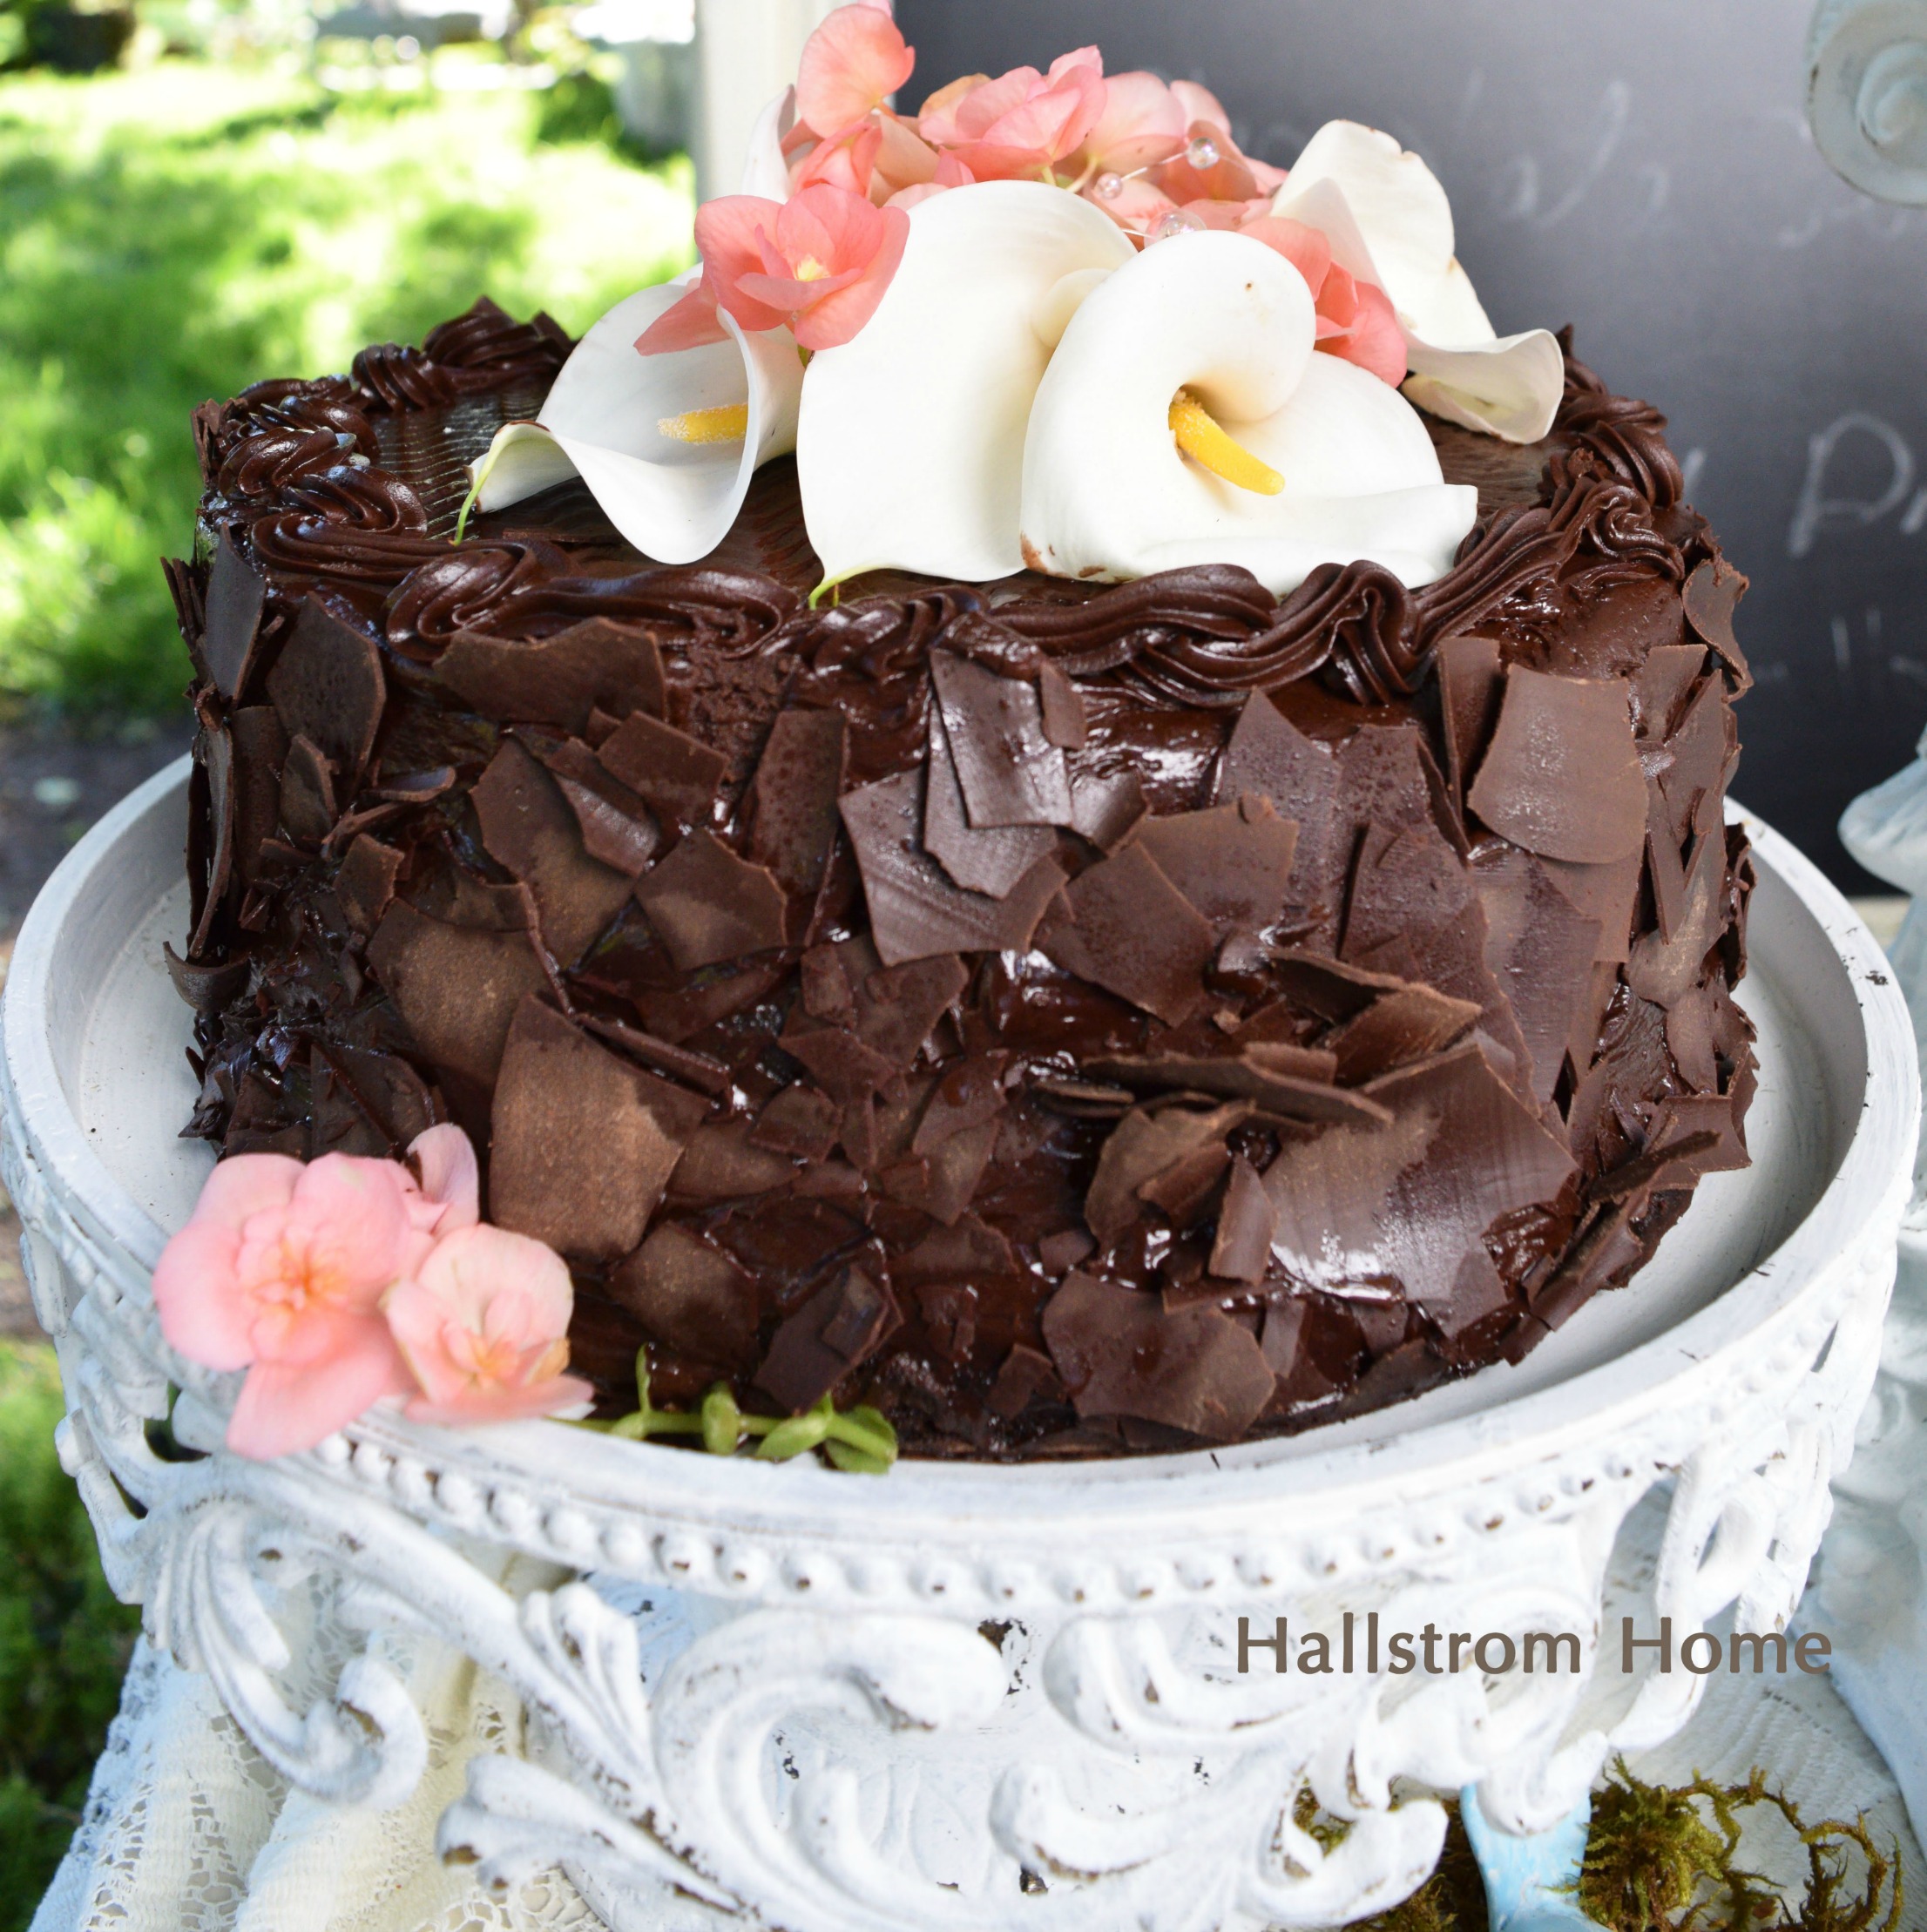 Garden Party Tablescape Decor Cake by Hallstrom Home